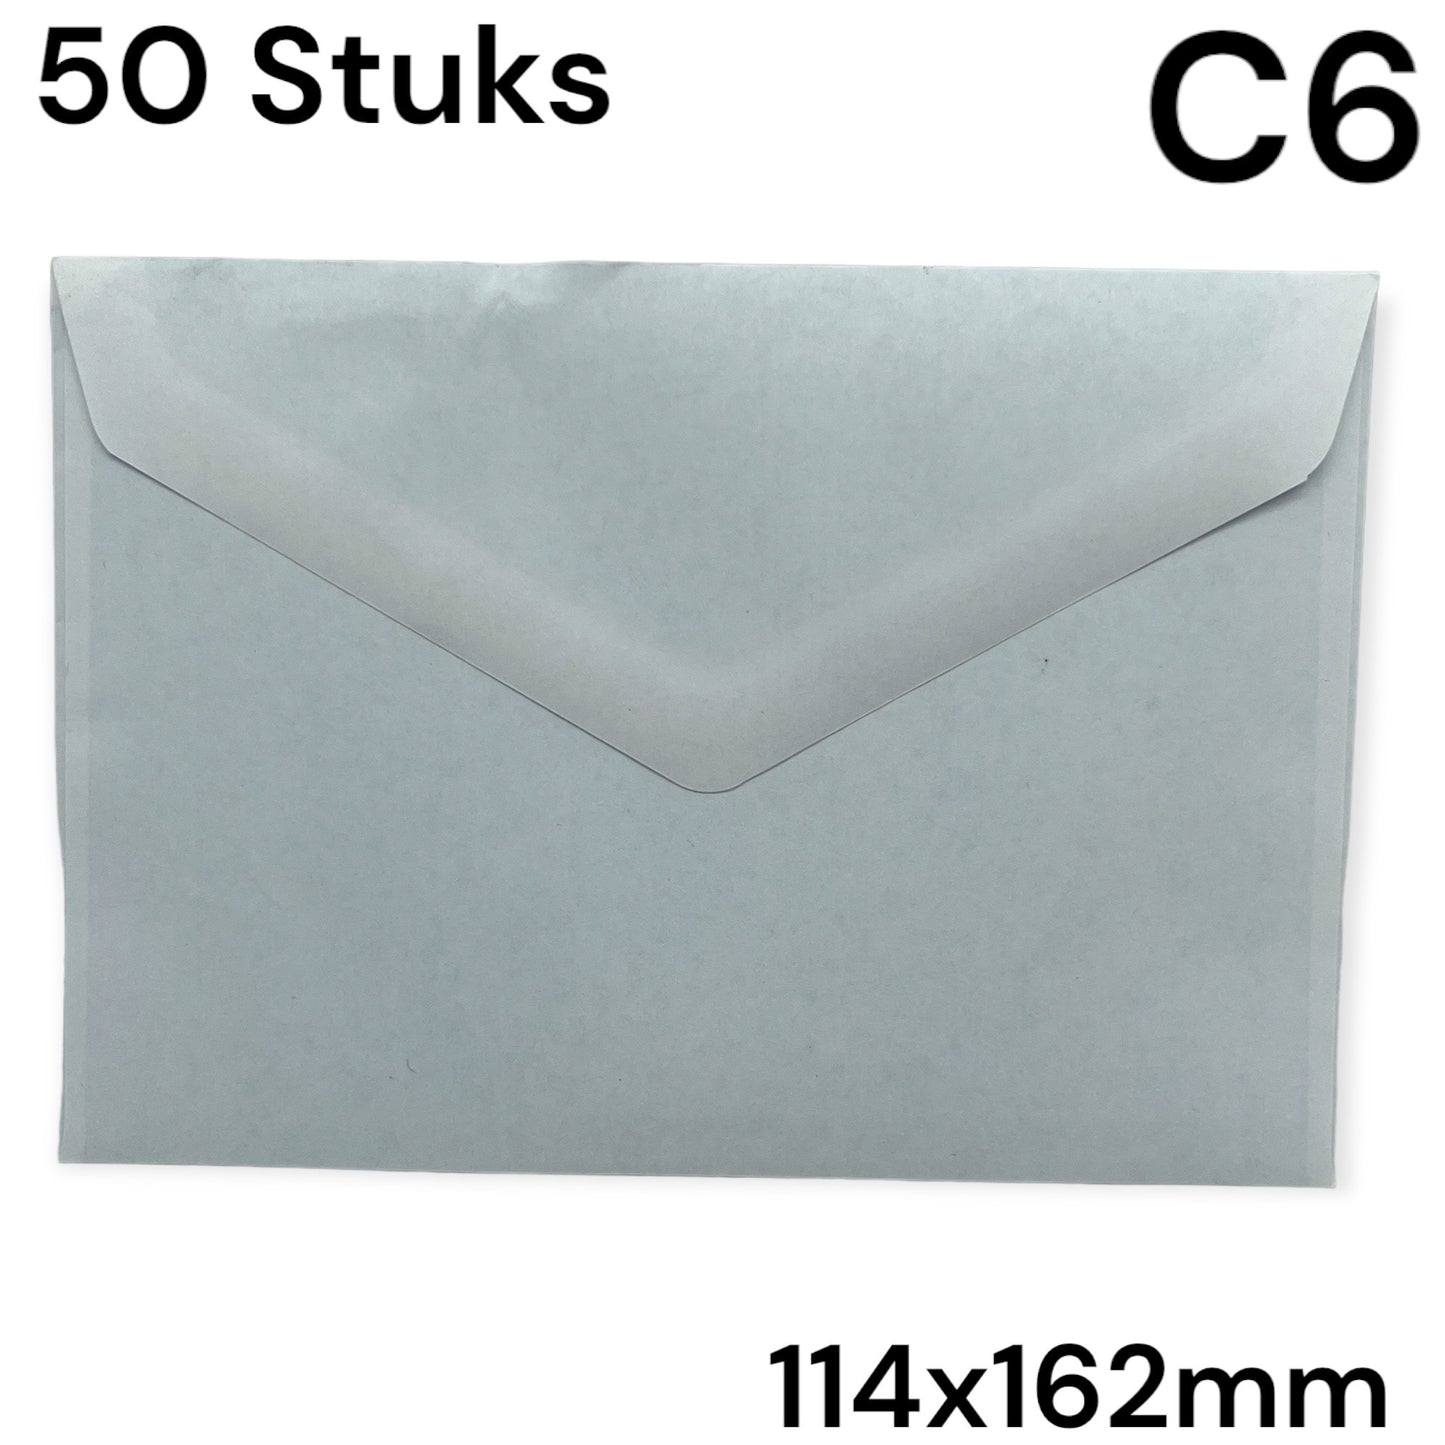 C6 Envelop Wit 114x162mm 50 Stuks